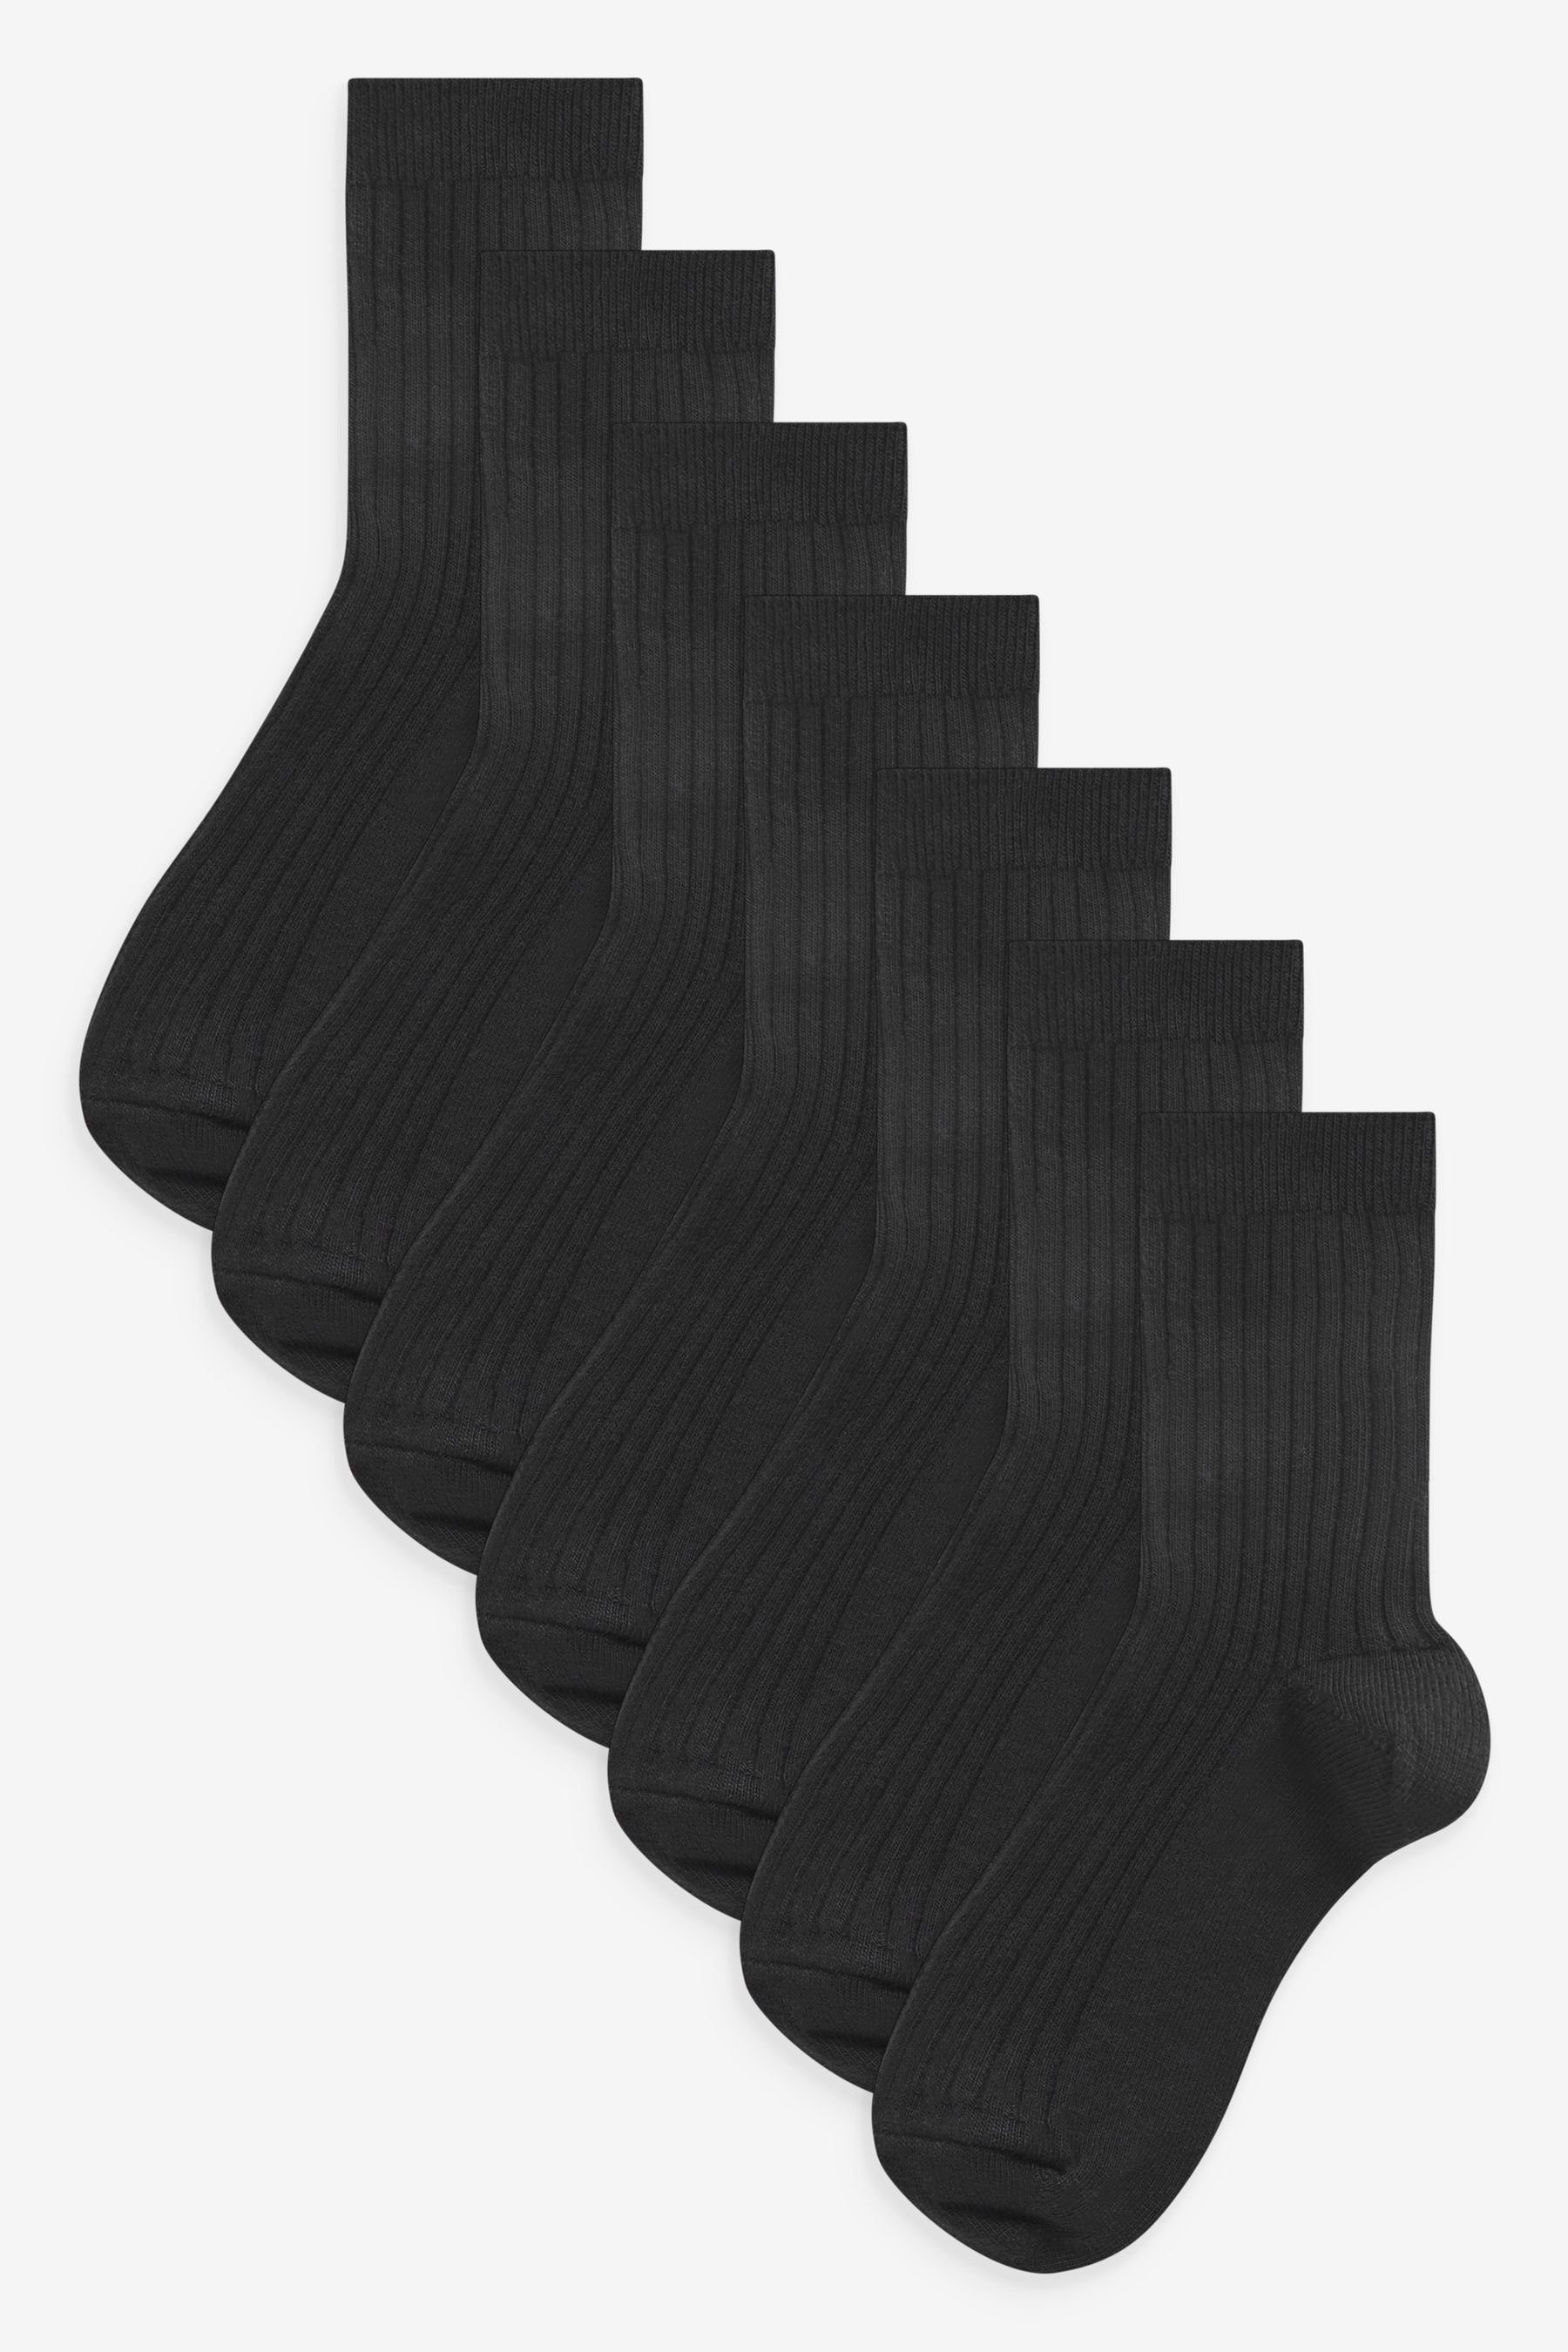 Next Kurzsocken Gerippte Socken mit hohem Baumwollanteil, 7er-Pack (7-Paar) Black